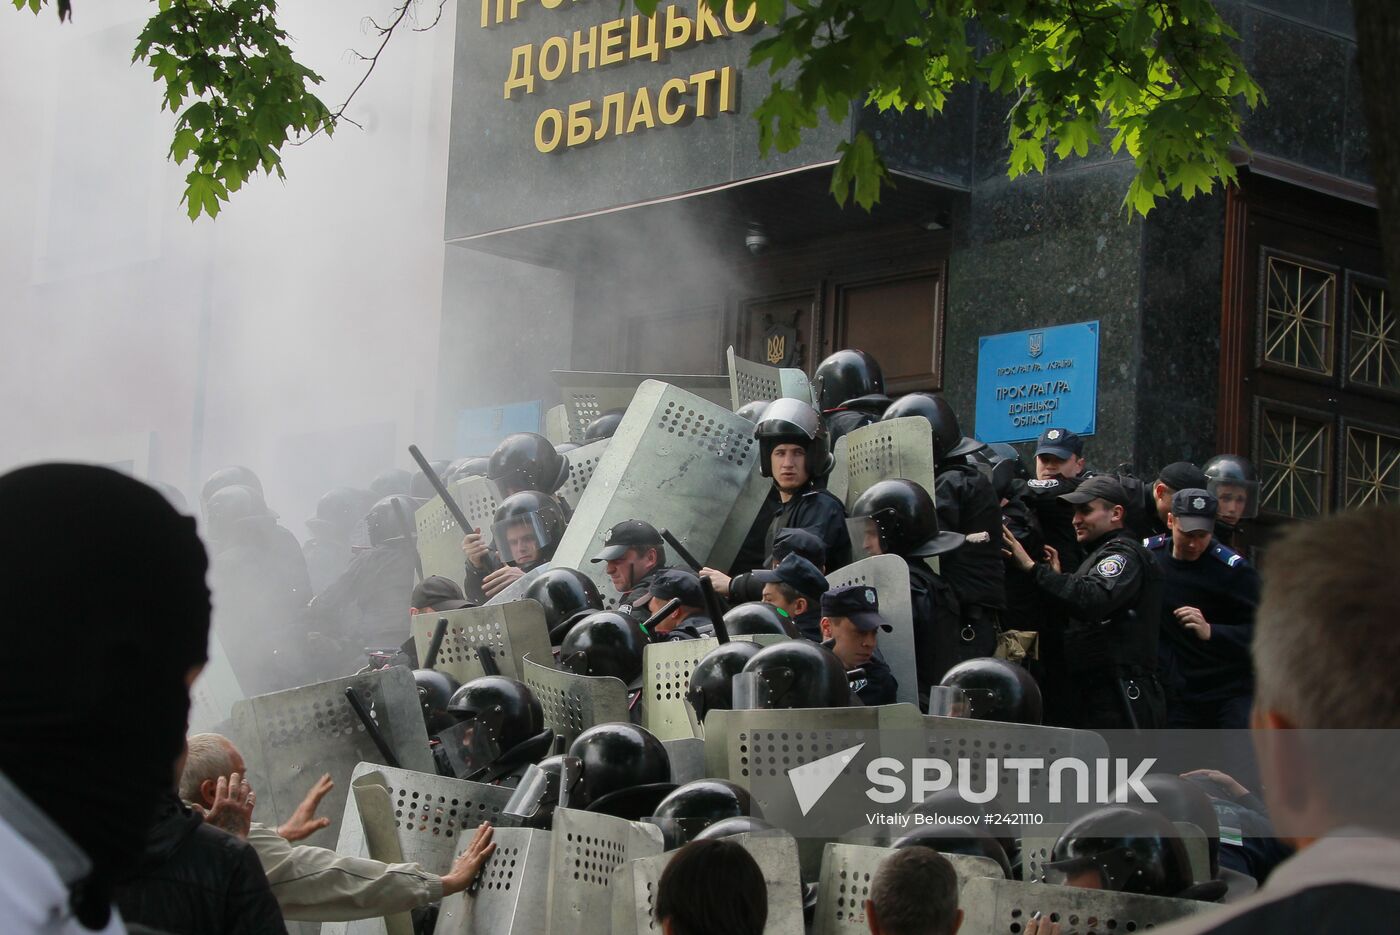 Federalization supporters seize Donetsk Region prosecutor's office